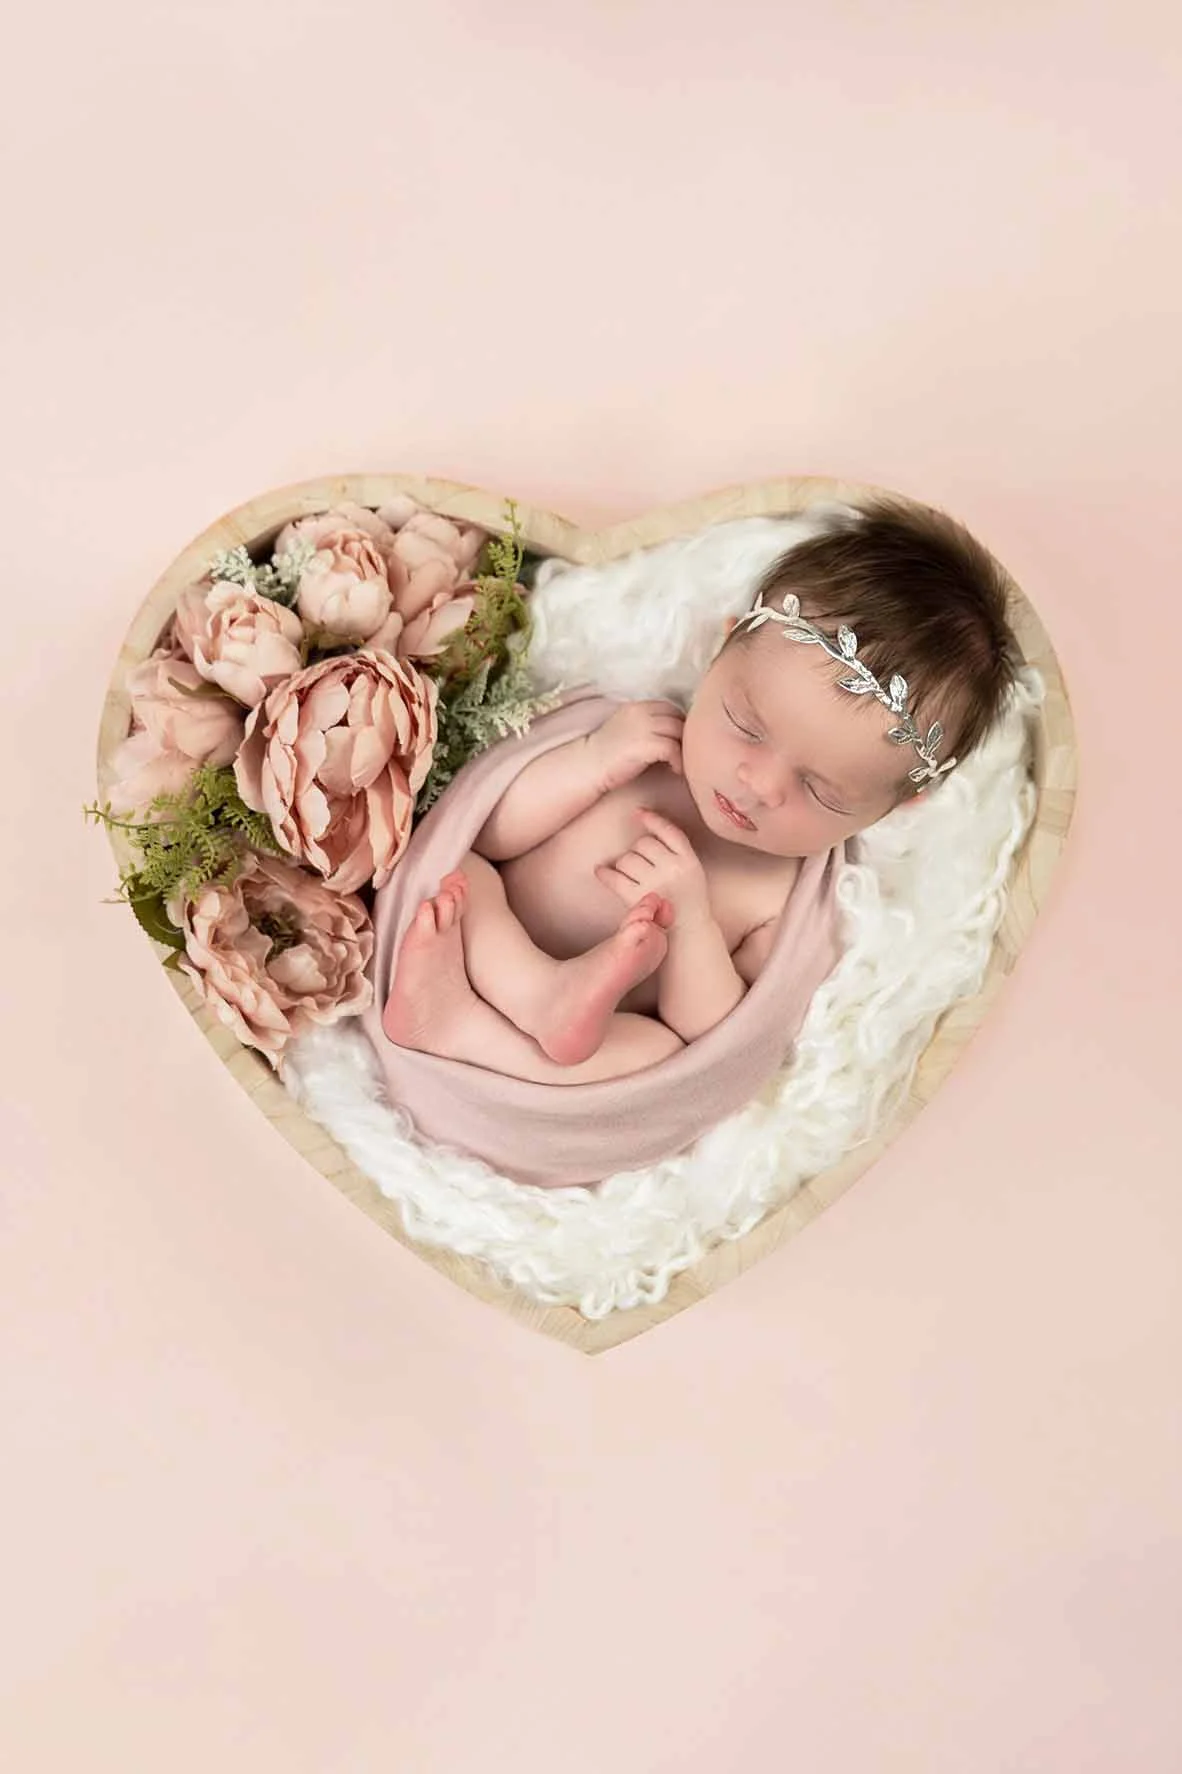 Newborn baby photography in heart shape